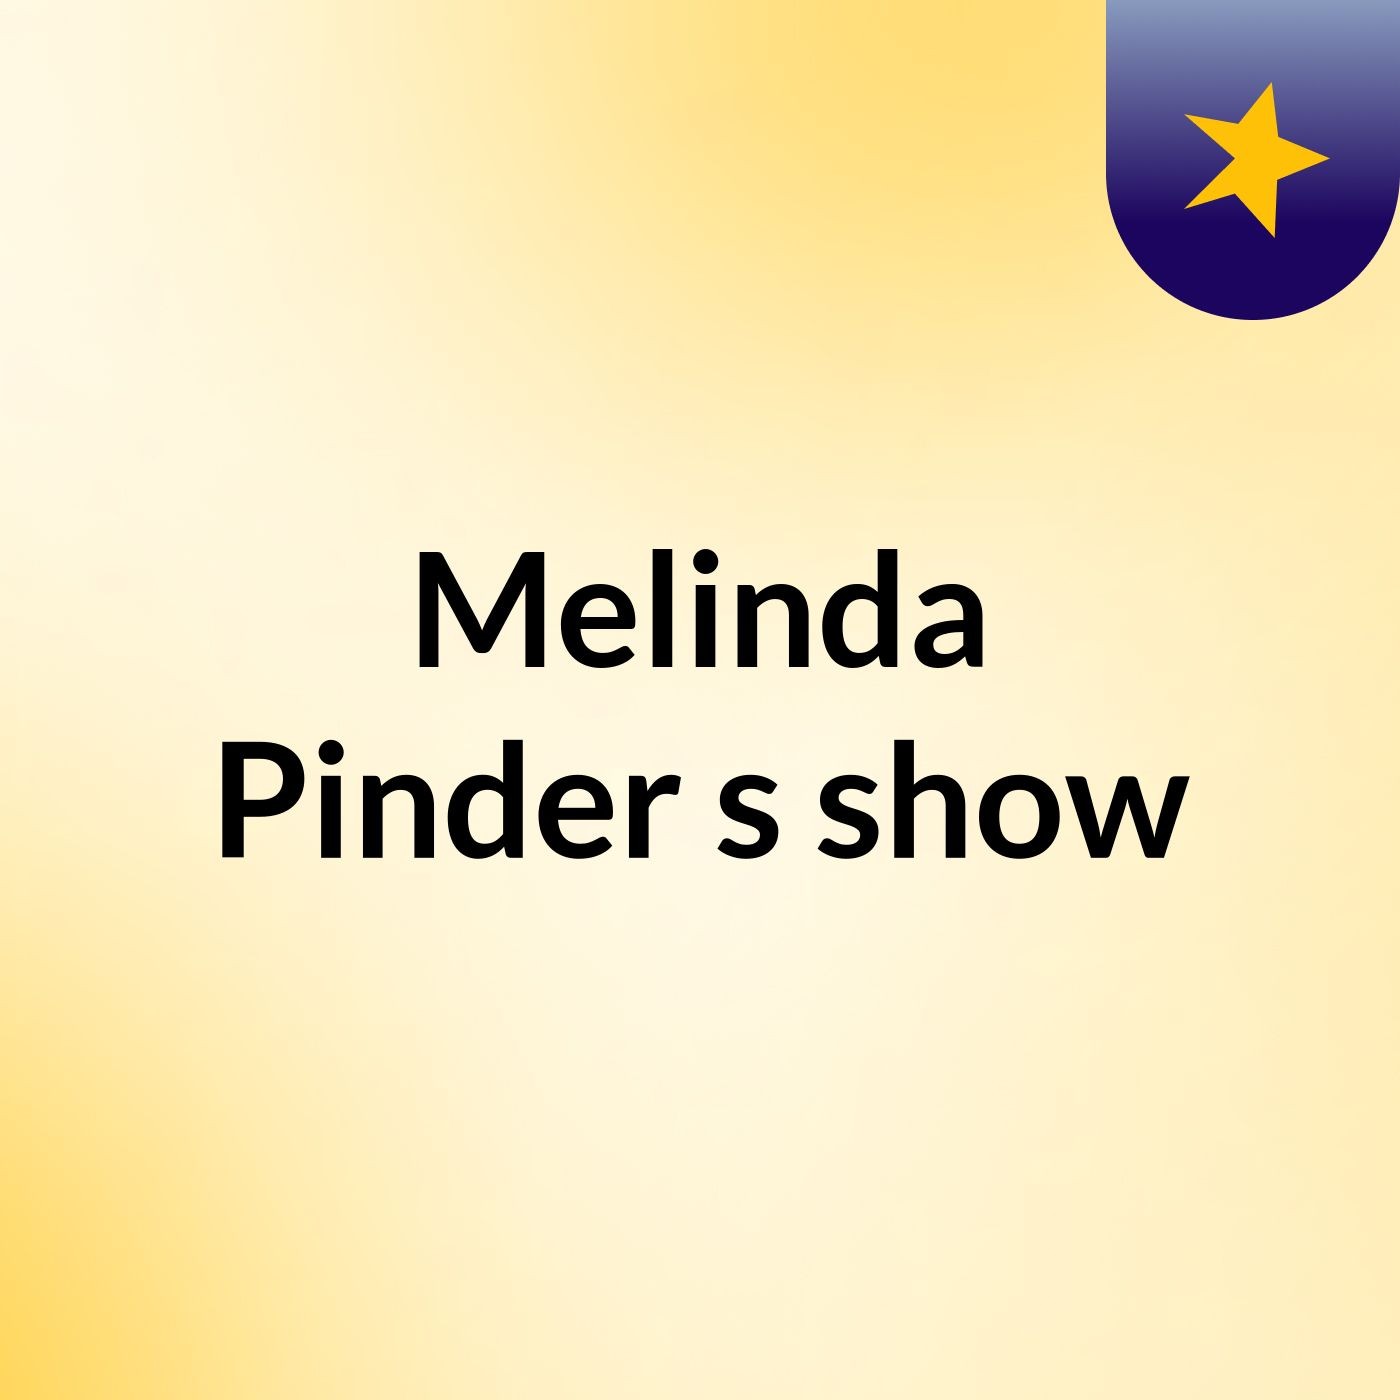 Melinda Pinder's show